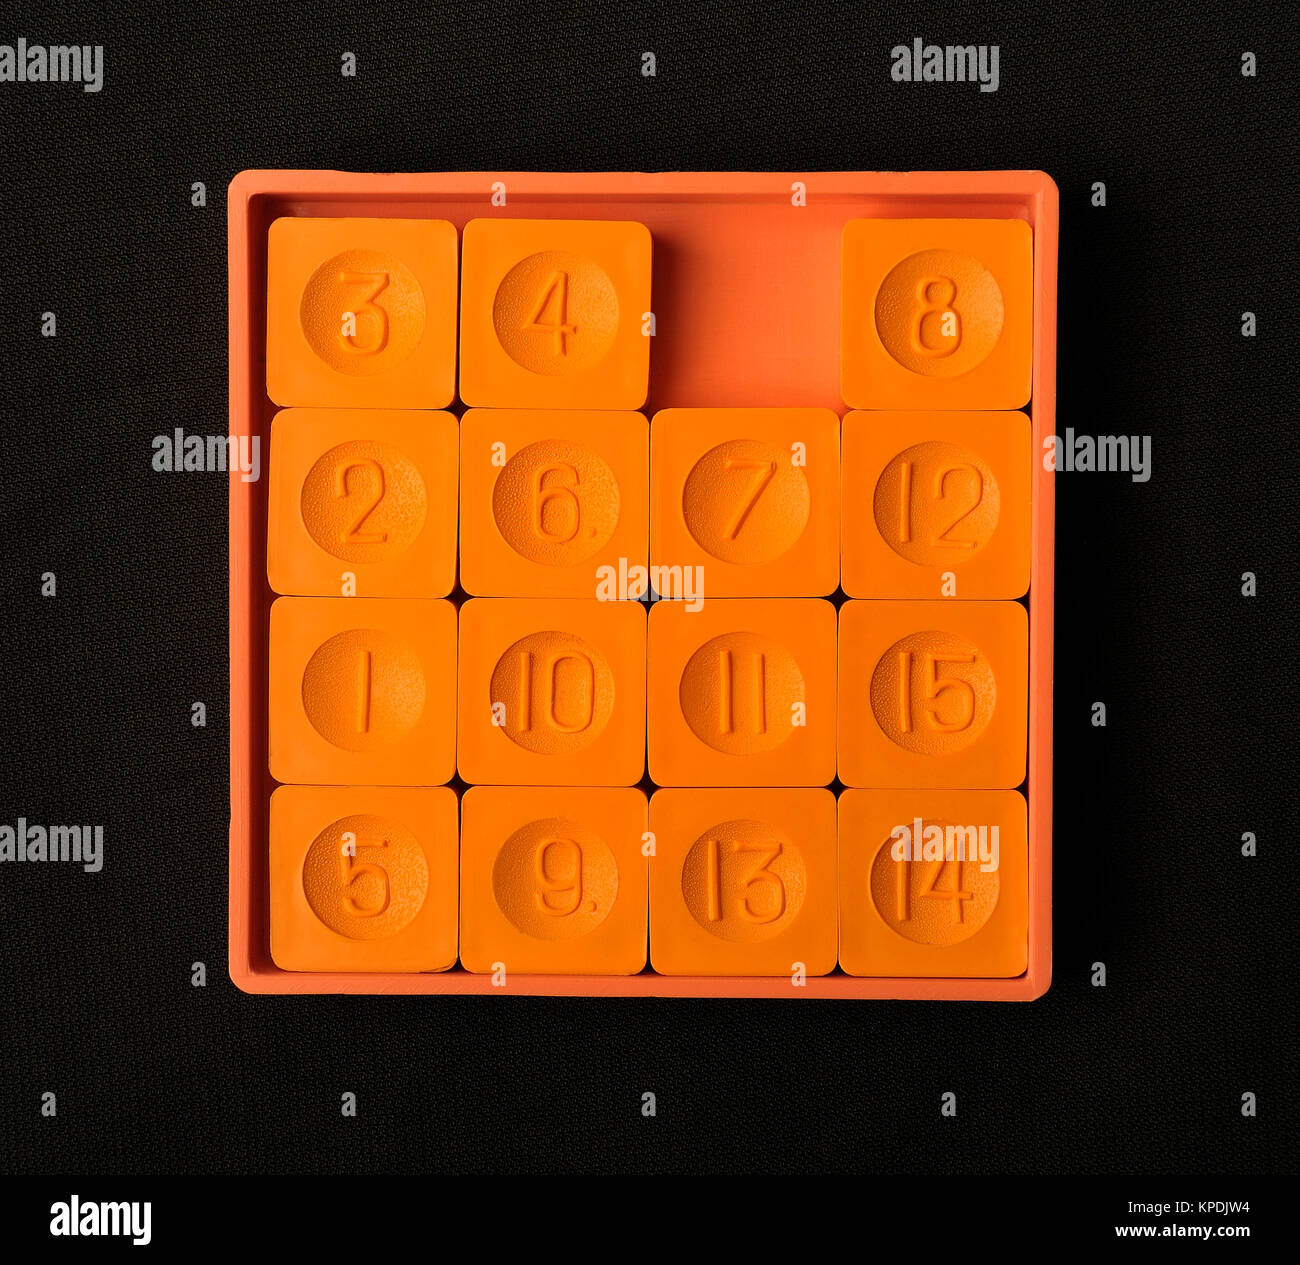 Pocket sliding fifteen puzzle game orange color on a dark background Stock Photo